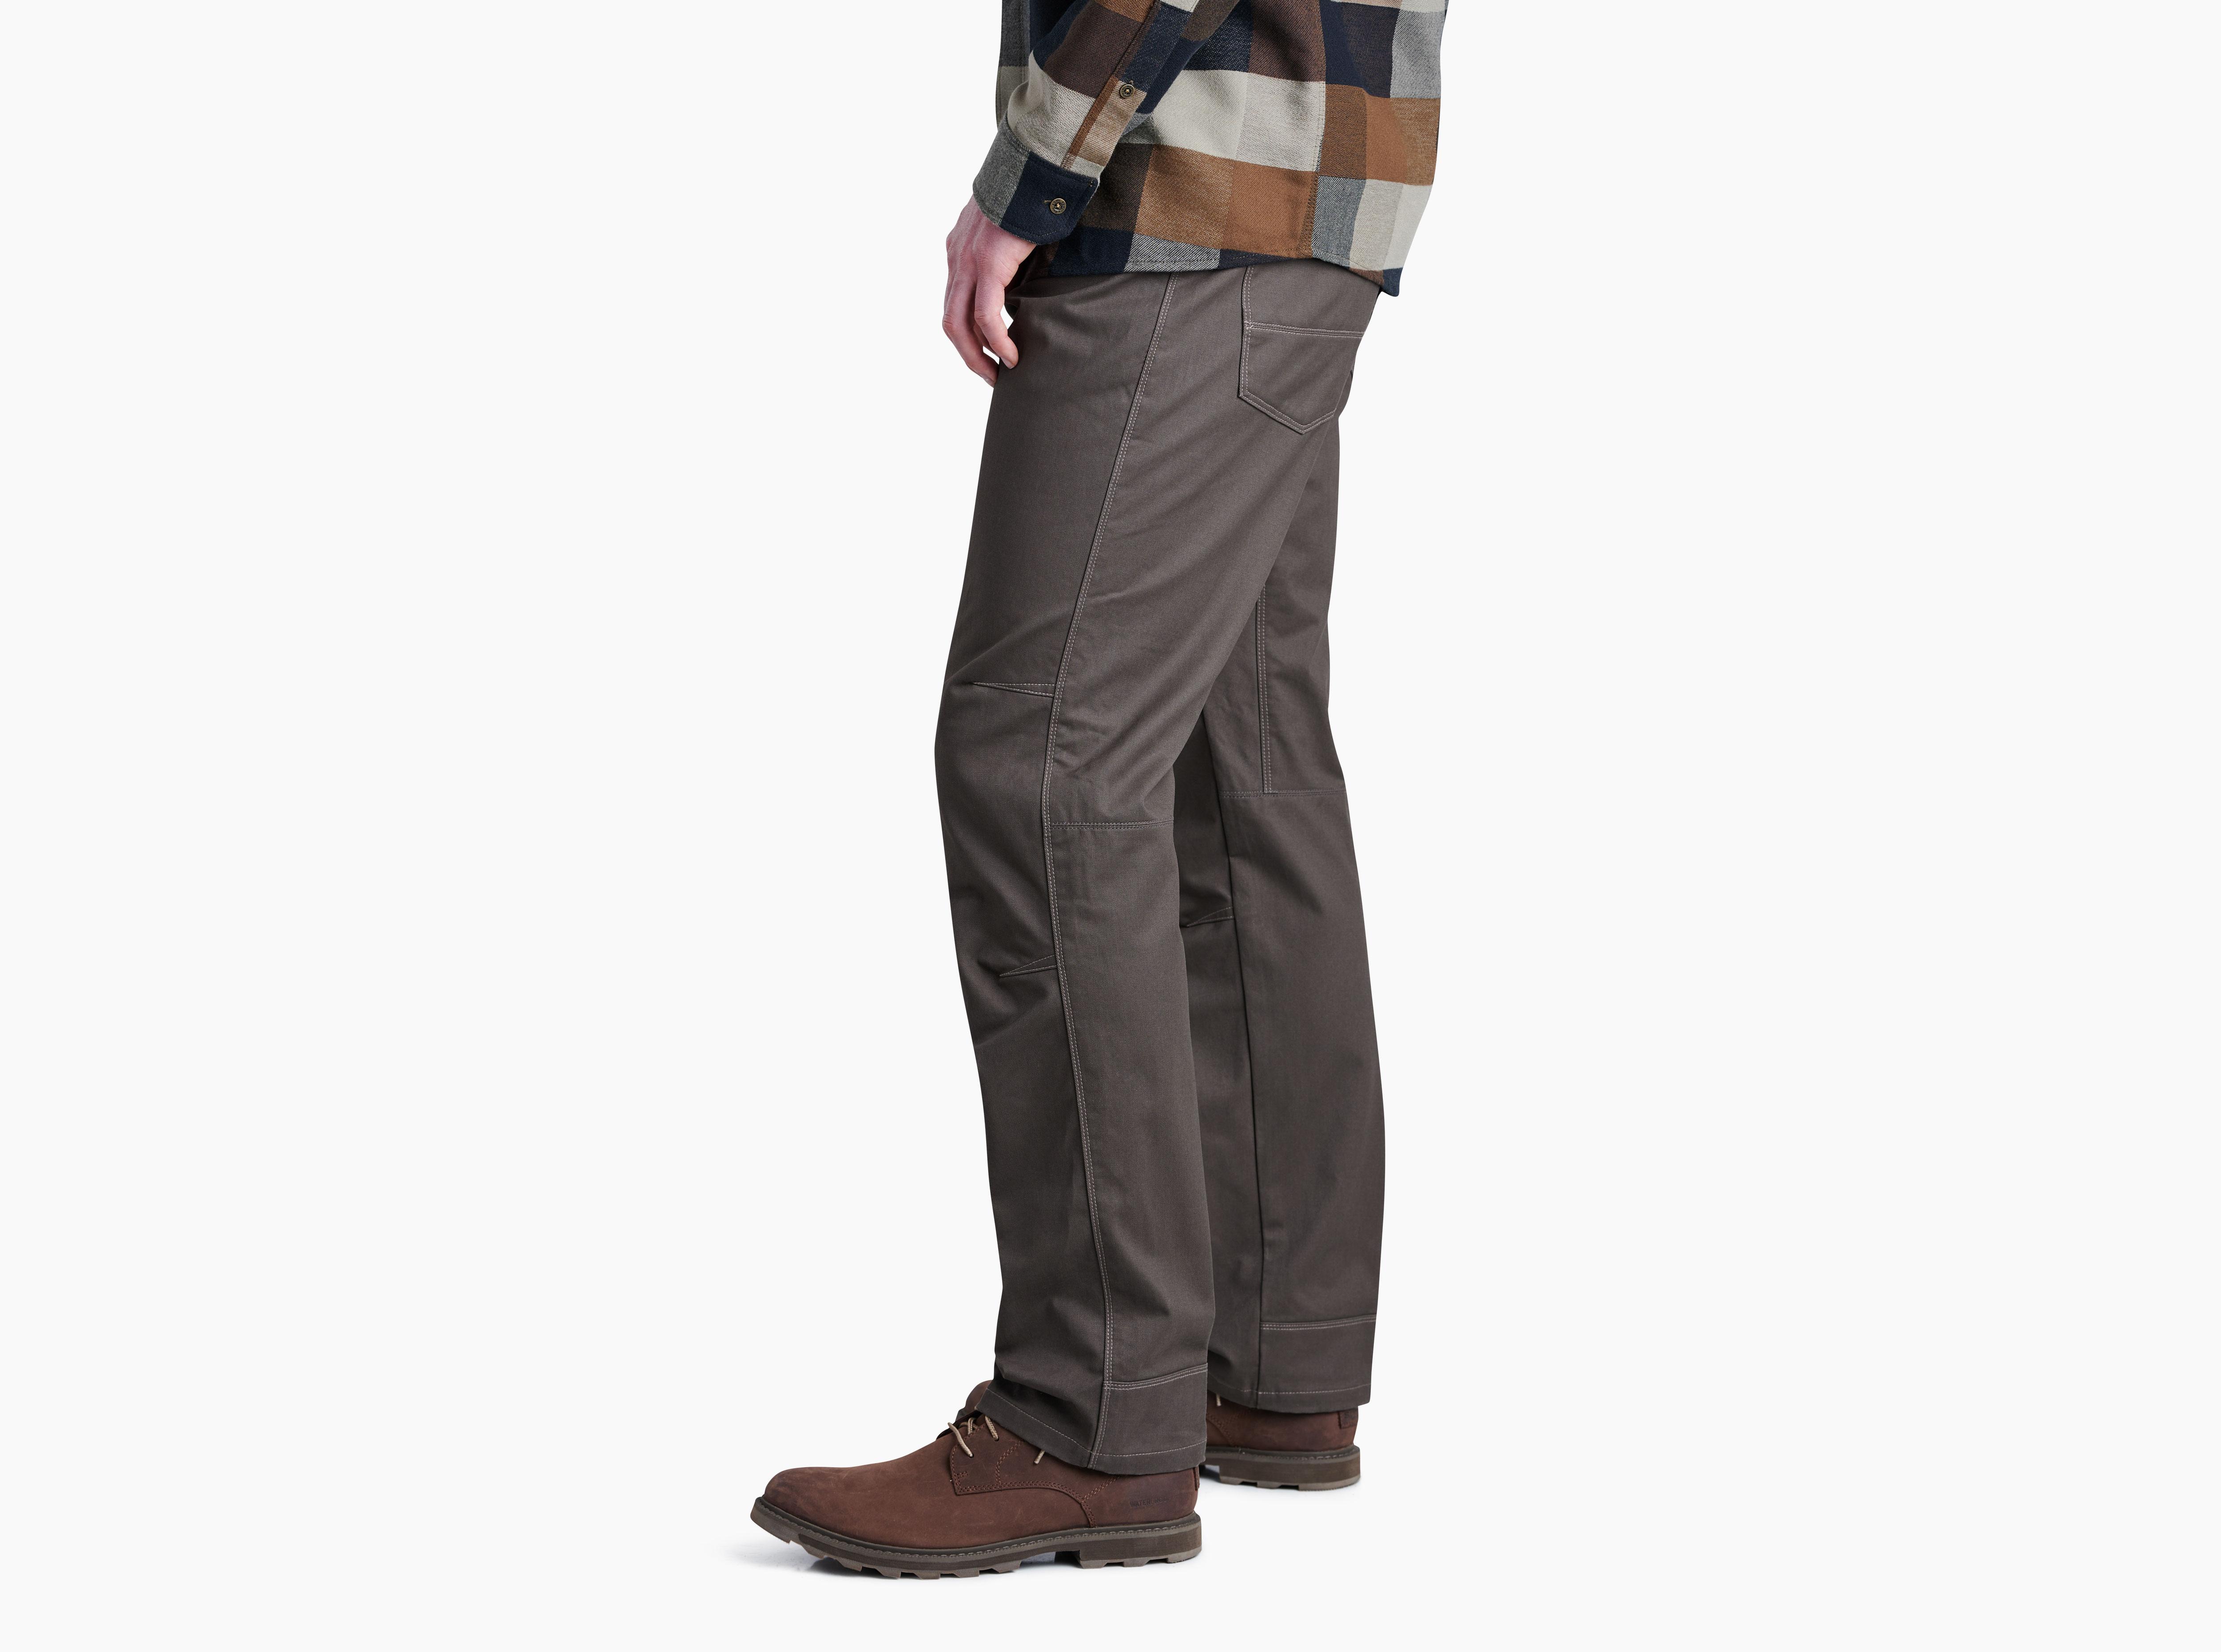 Kuhl Rydr Pants Outdoor Workwear Men's Size 36x32(31) Beige